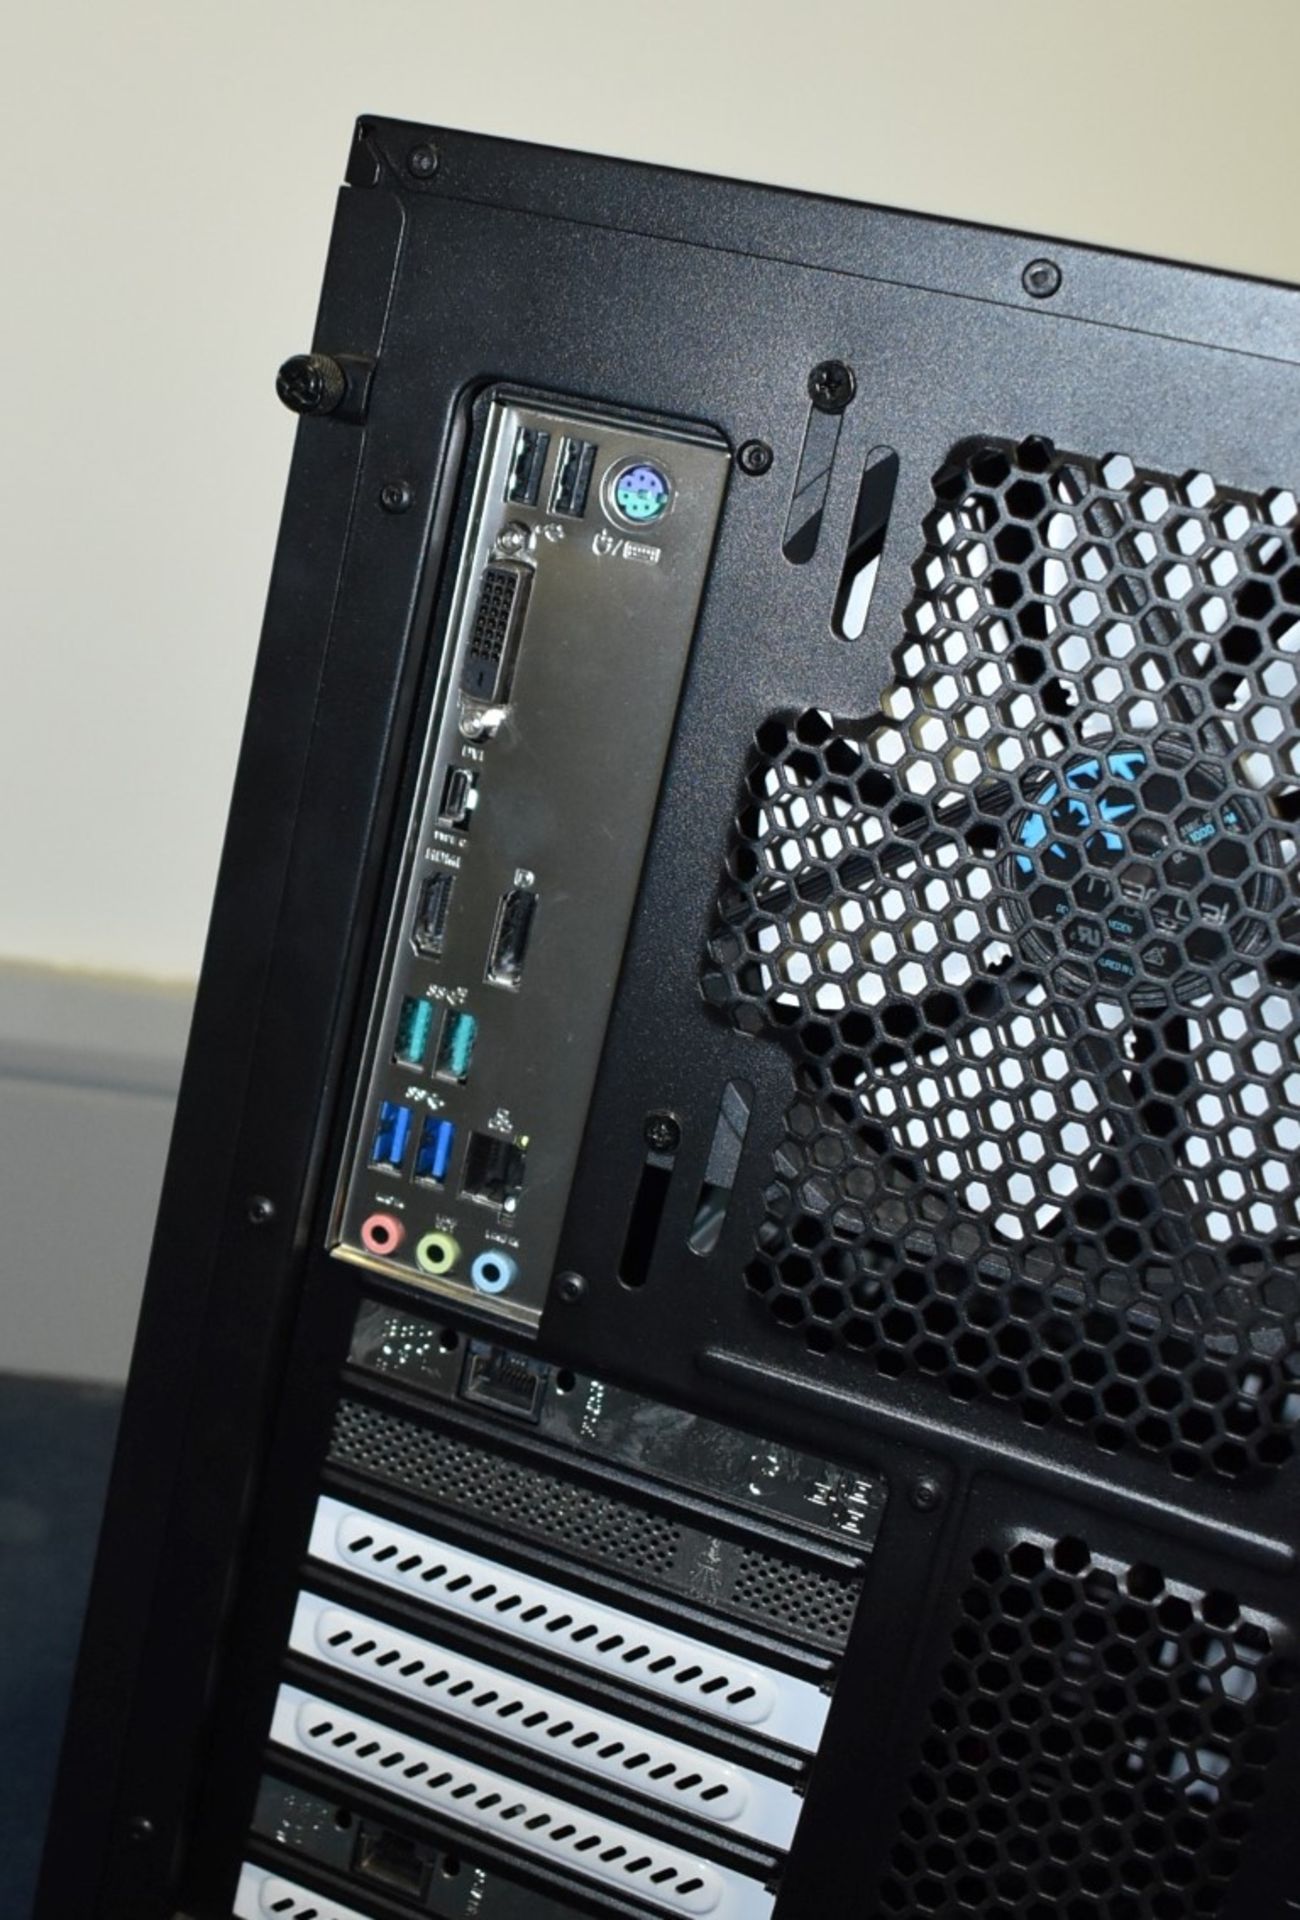 1 x Desktop PC Server Featuring an Intel i7-6700 Processor, 16gb DDR4 Ram, BeQuiet 500w PSU - Image 5 of 10